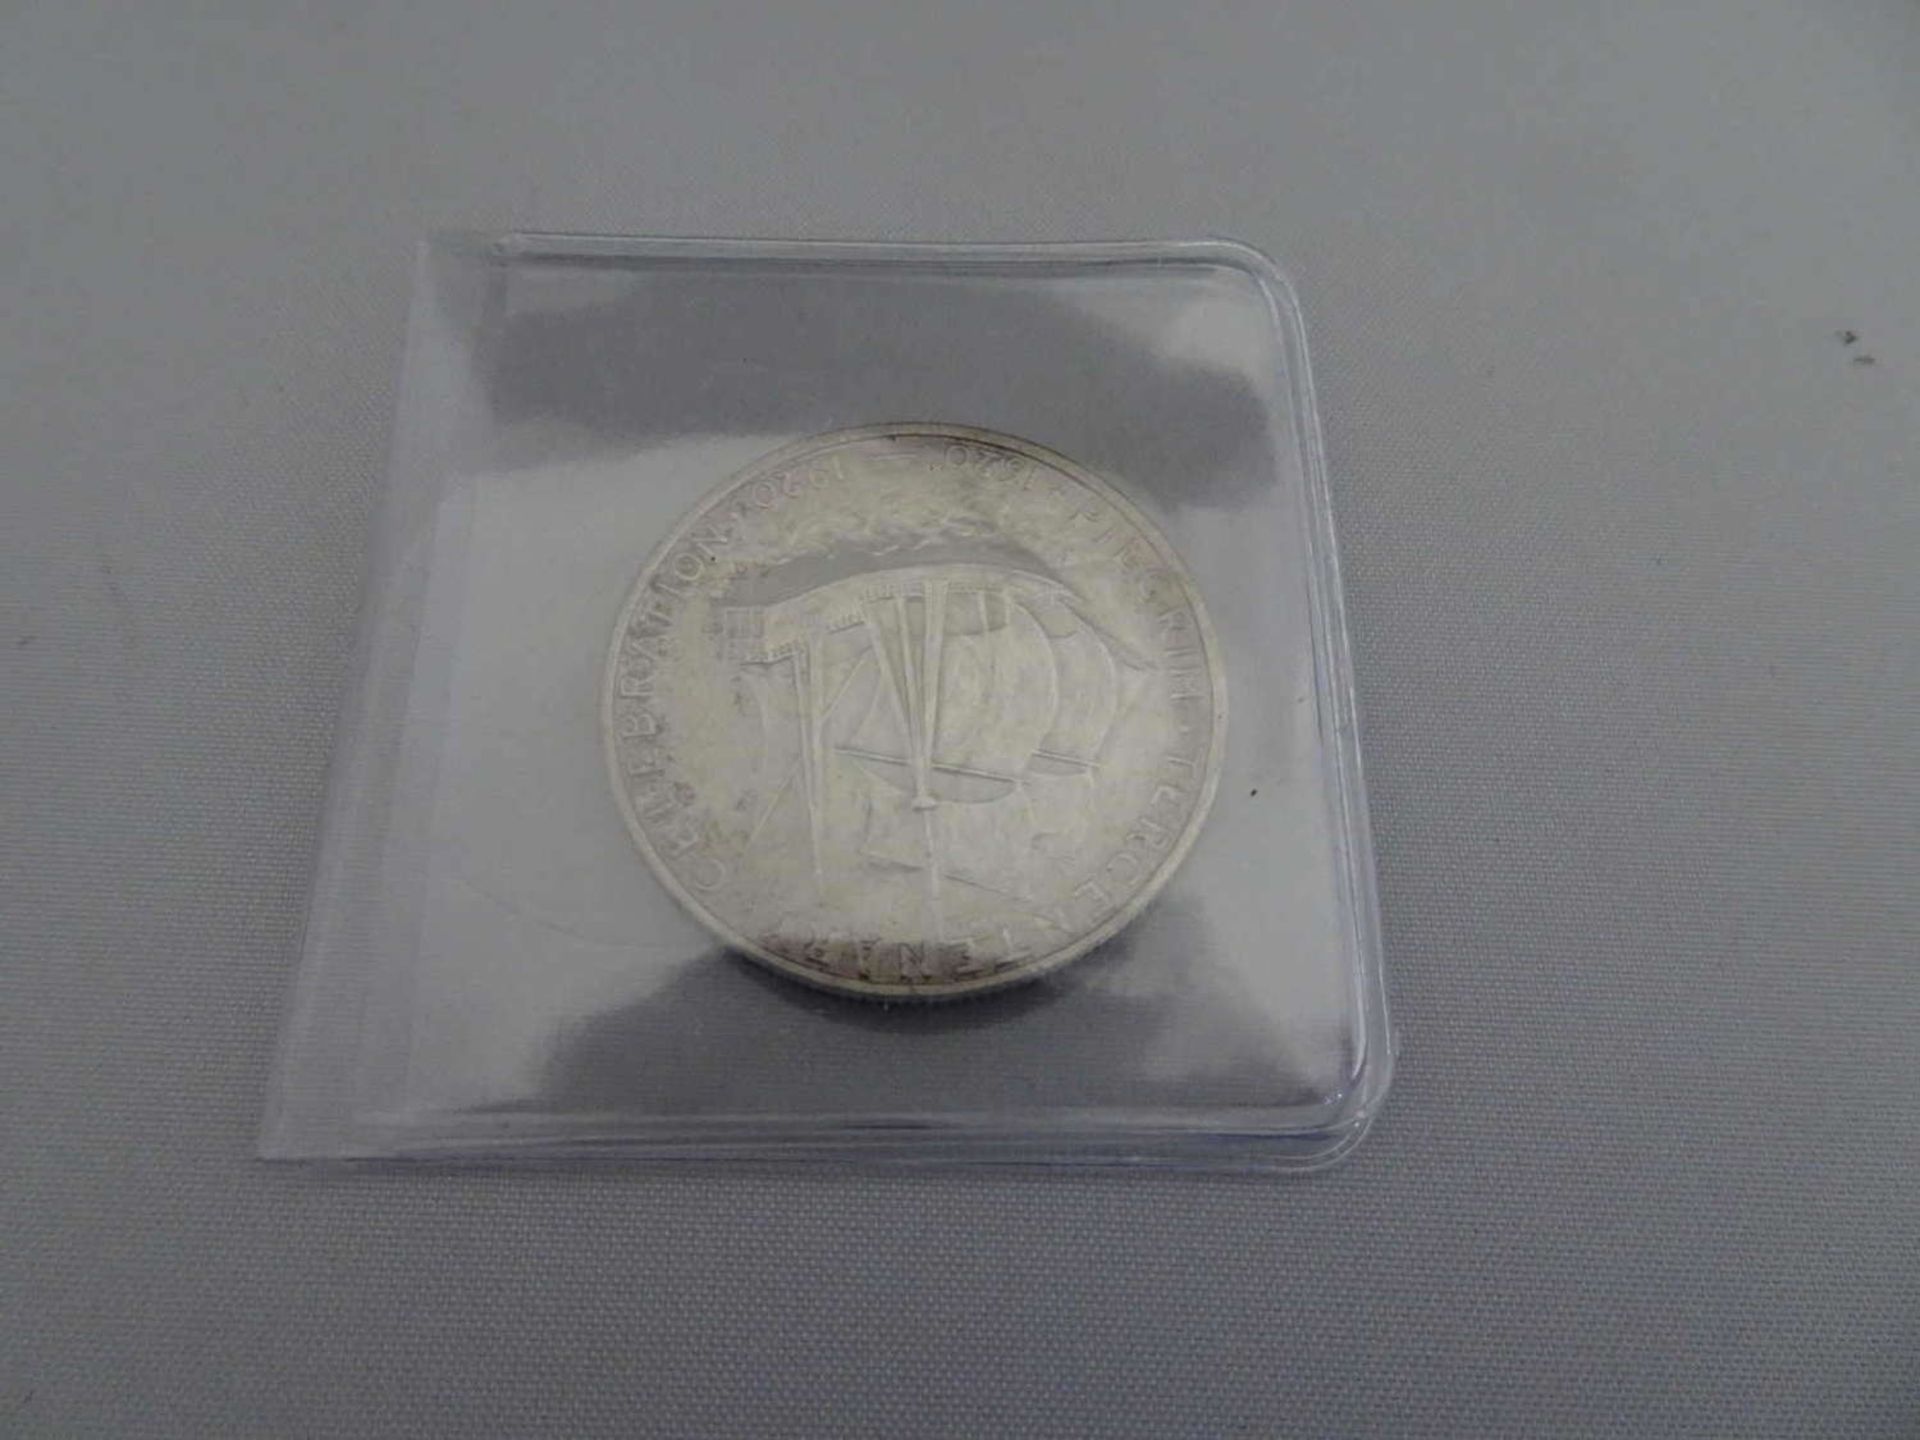 1/2 Dollar 1920, Pilgrim Tercentenary, KM 147.1, leicht unregelmäßige Patina, Erhaltung: - Bild 2 aus 2